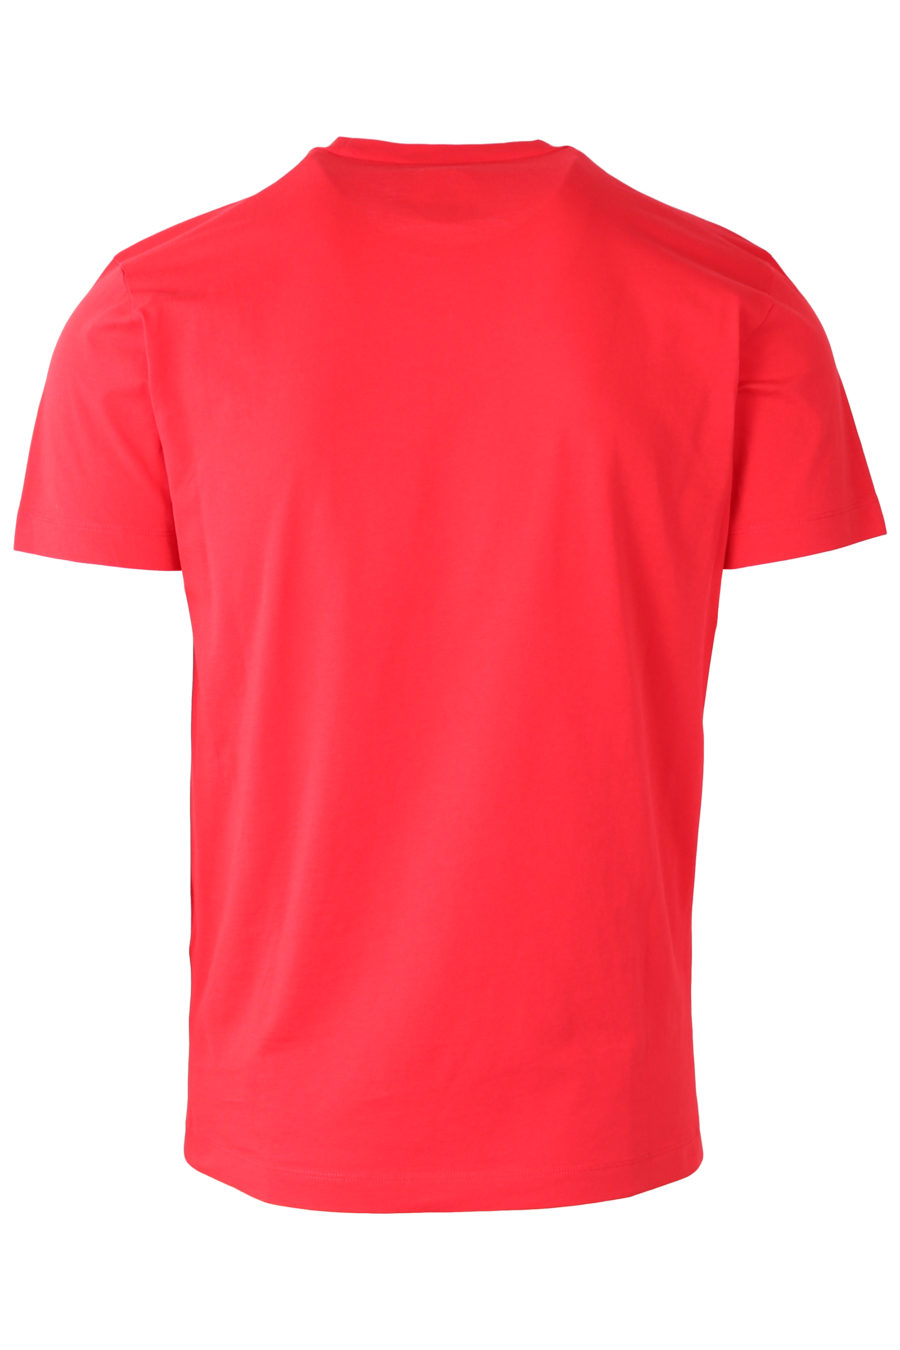 Camiseta roja con logotipo "Icon" - ac95c0a0fecf05a0c036430b8b48f29d9d6d5f25